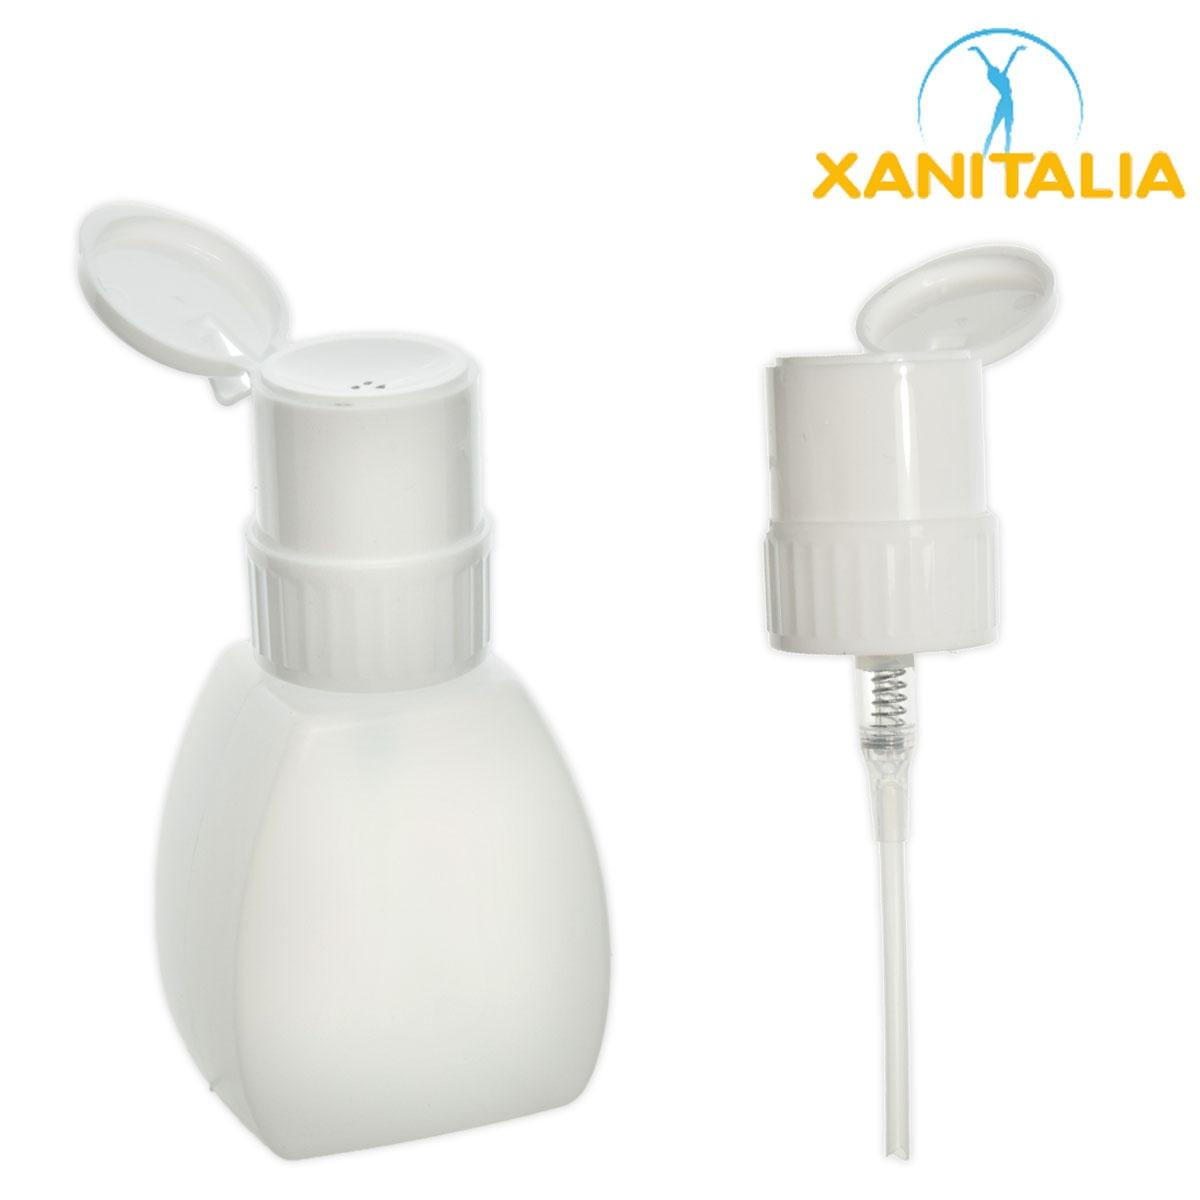 Xanitalia Pumpflasche 200 ml